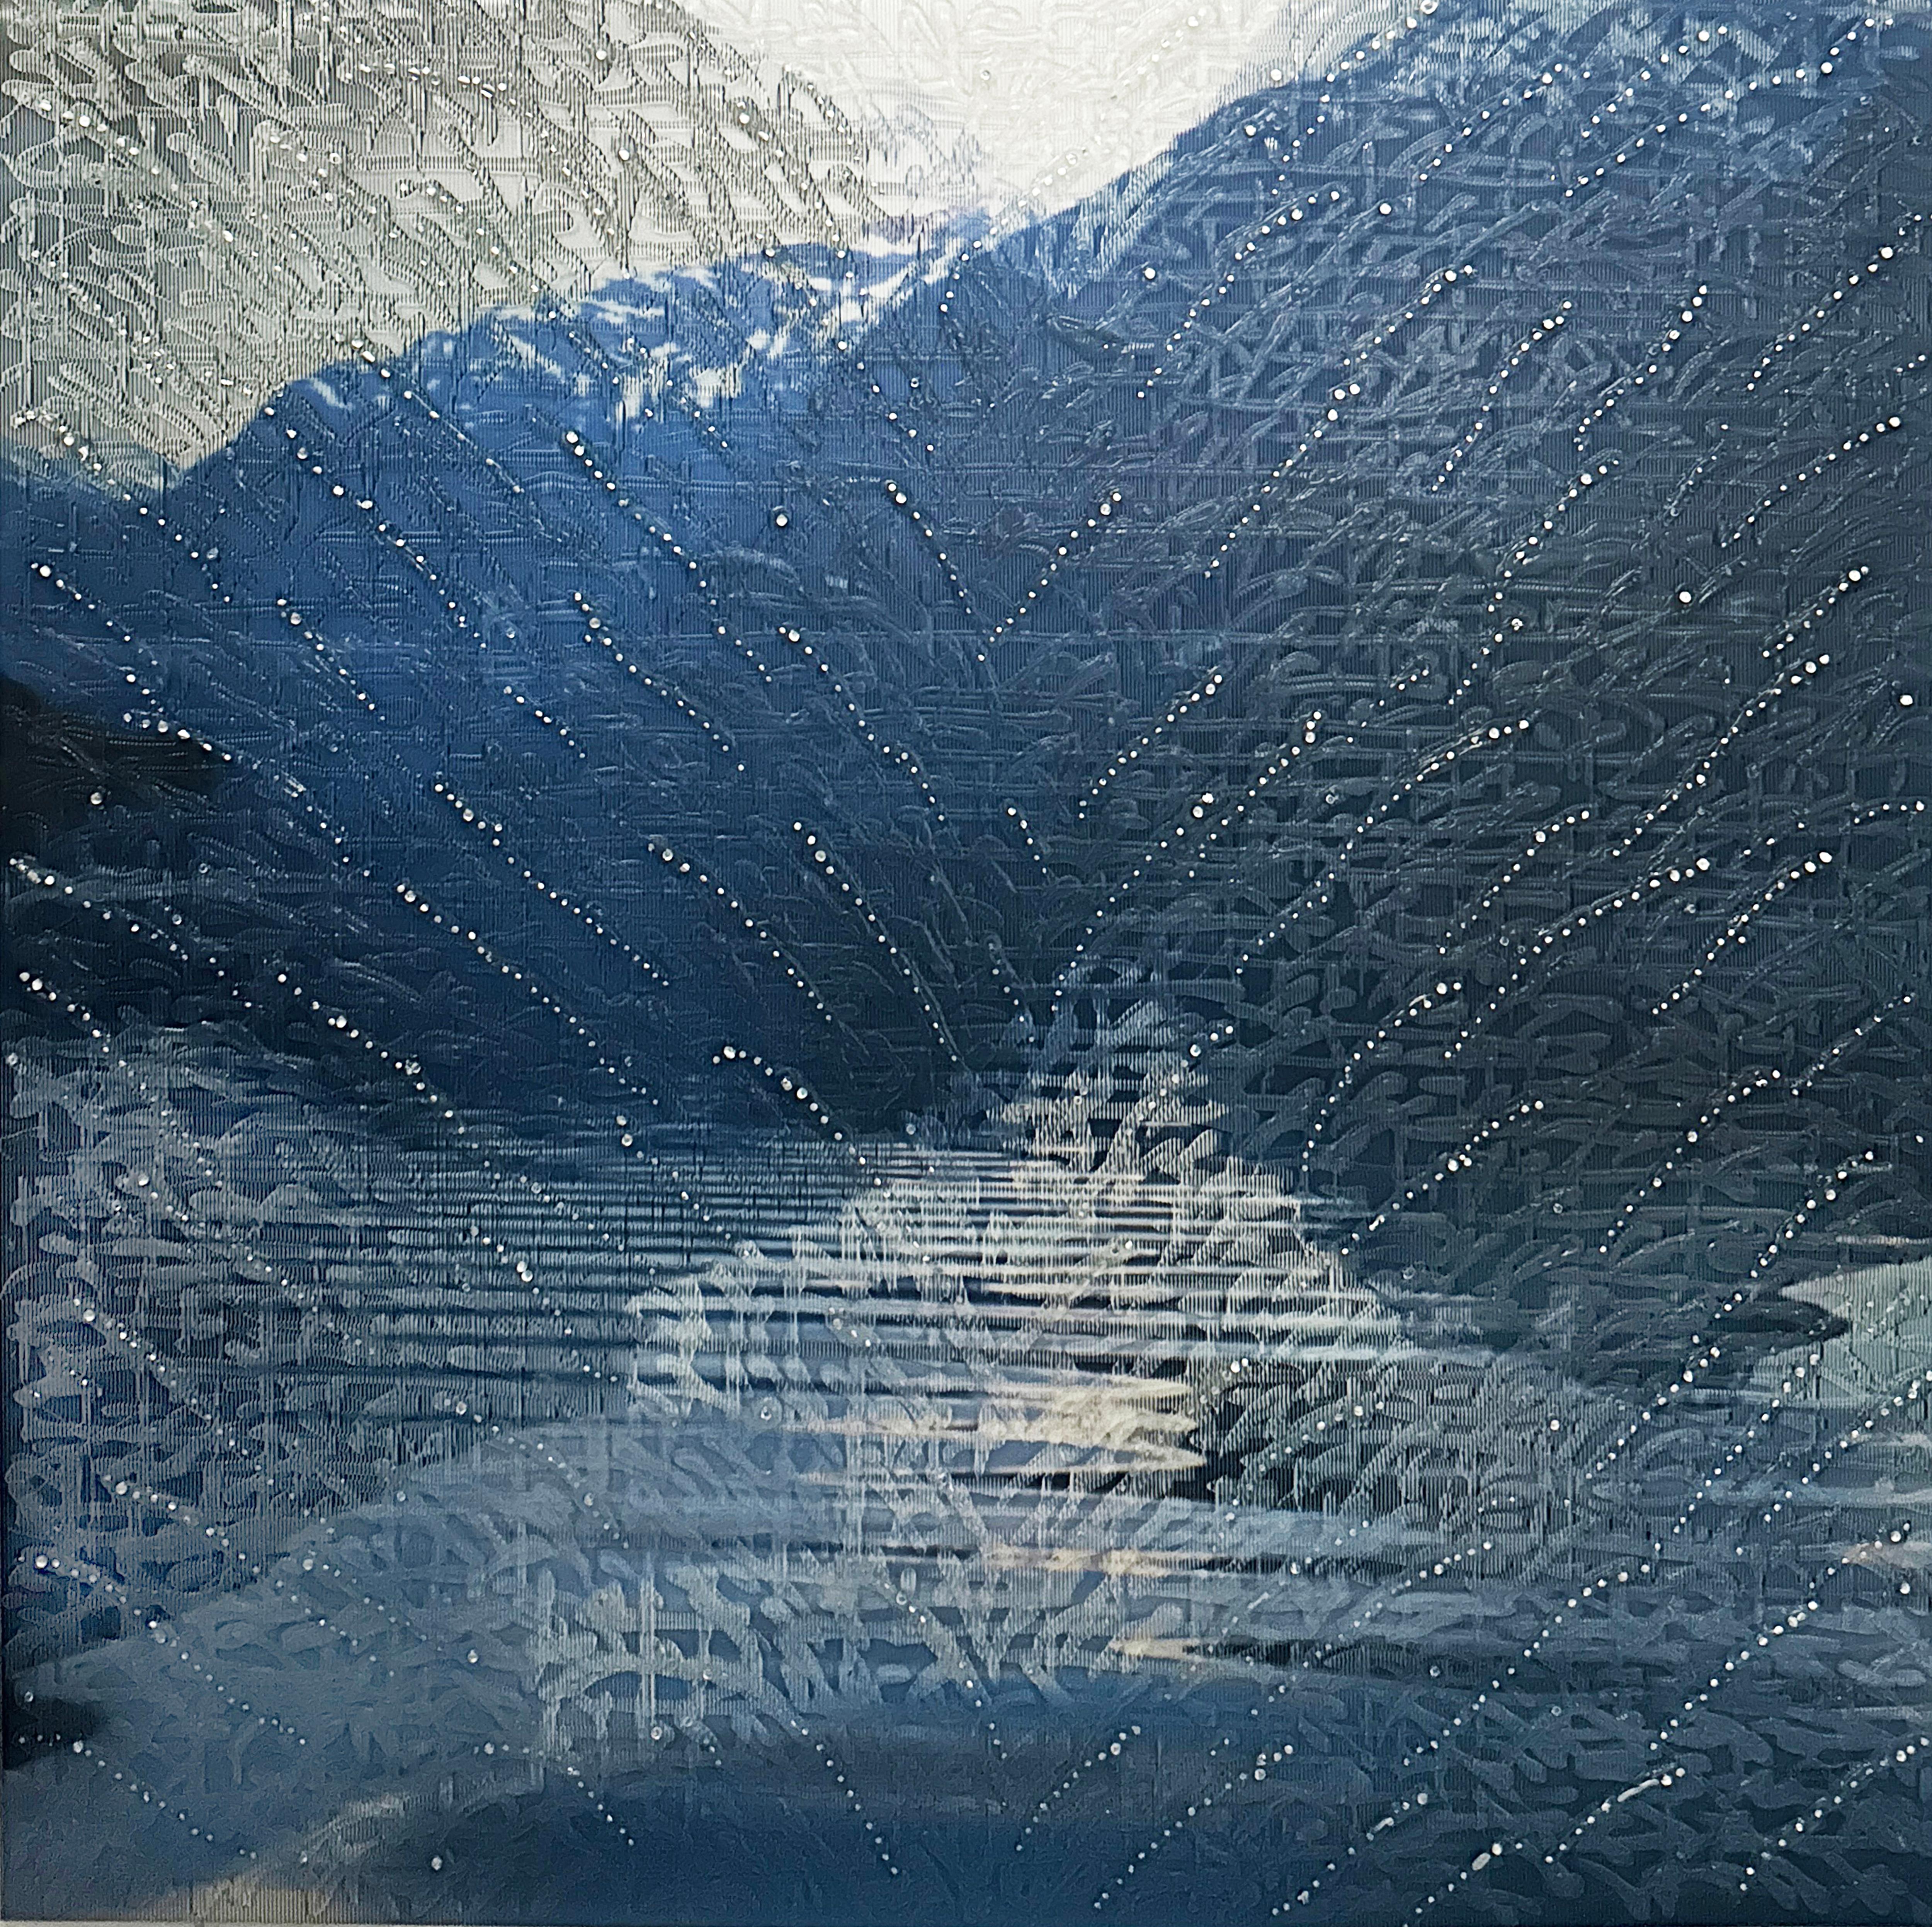 Barbara Strasen Figurative Painting - SPLASH MOUNTAINS, Lenticular, patterned, landscape, mountains, blue, gray